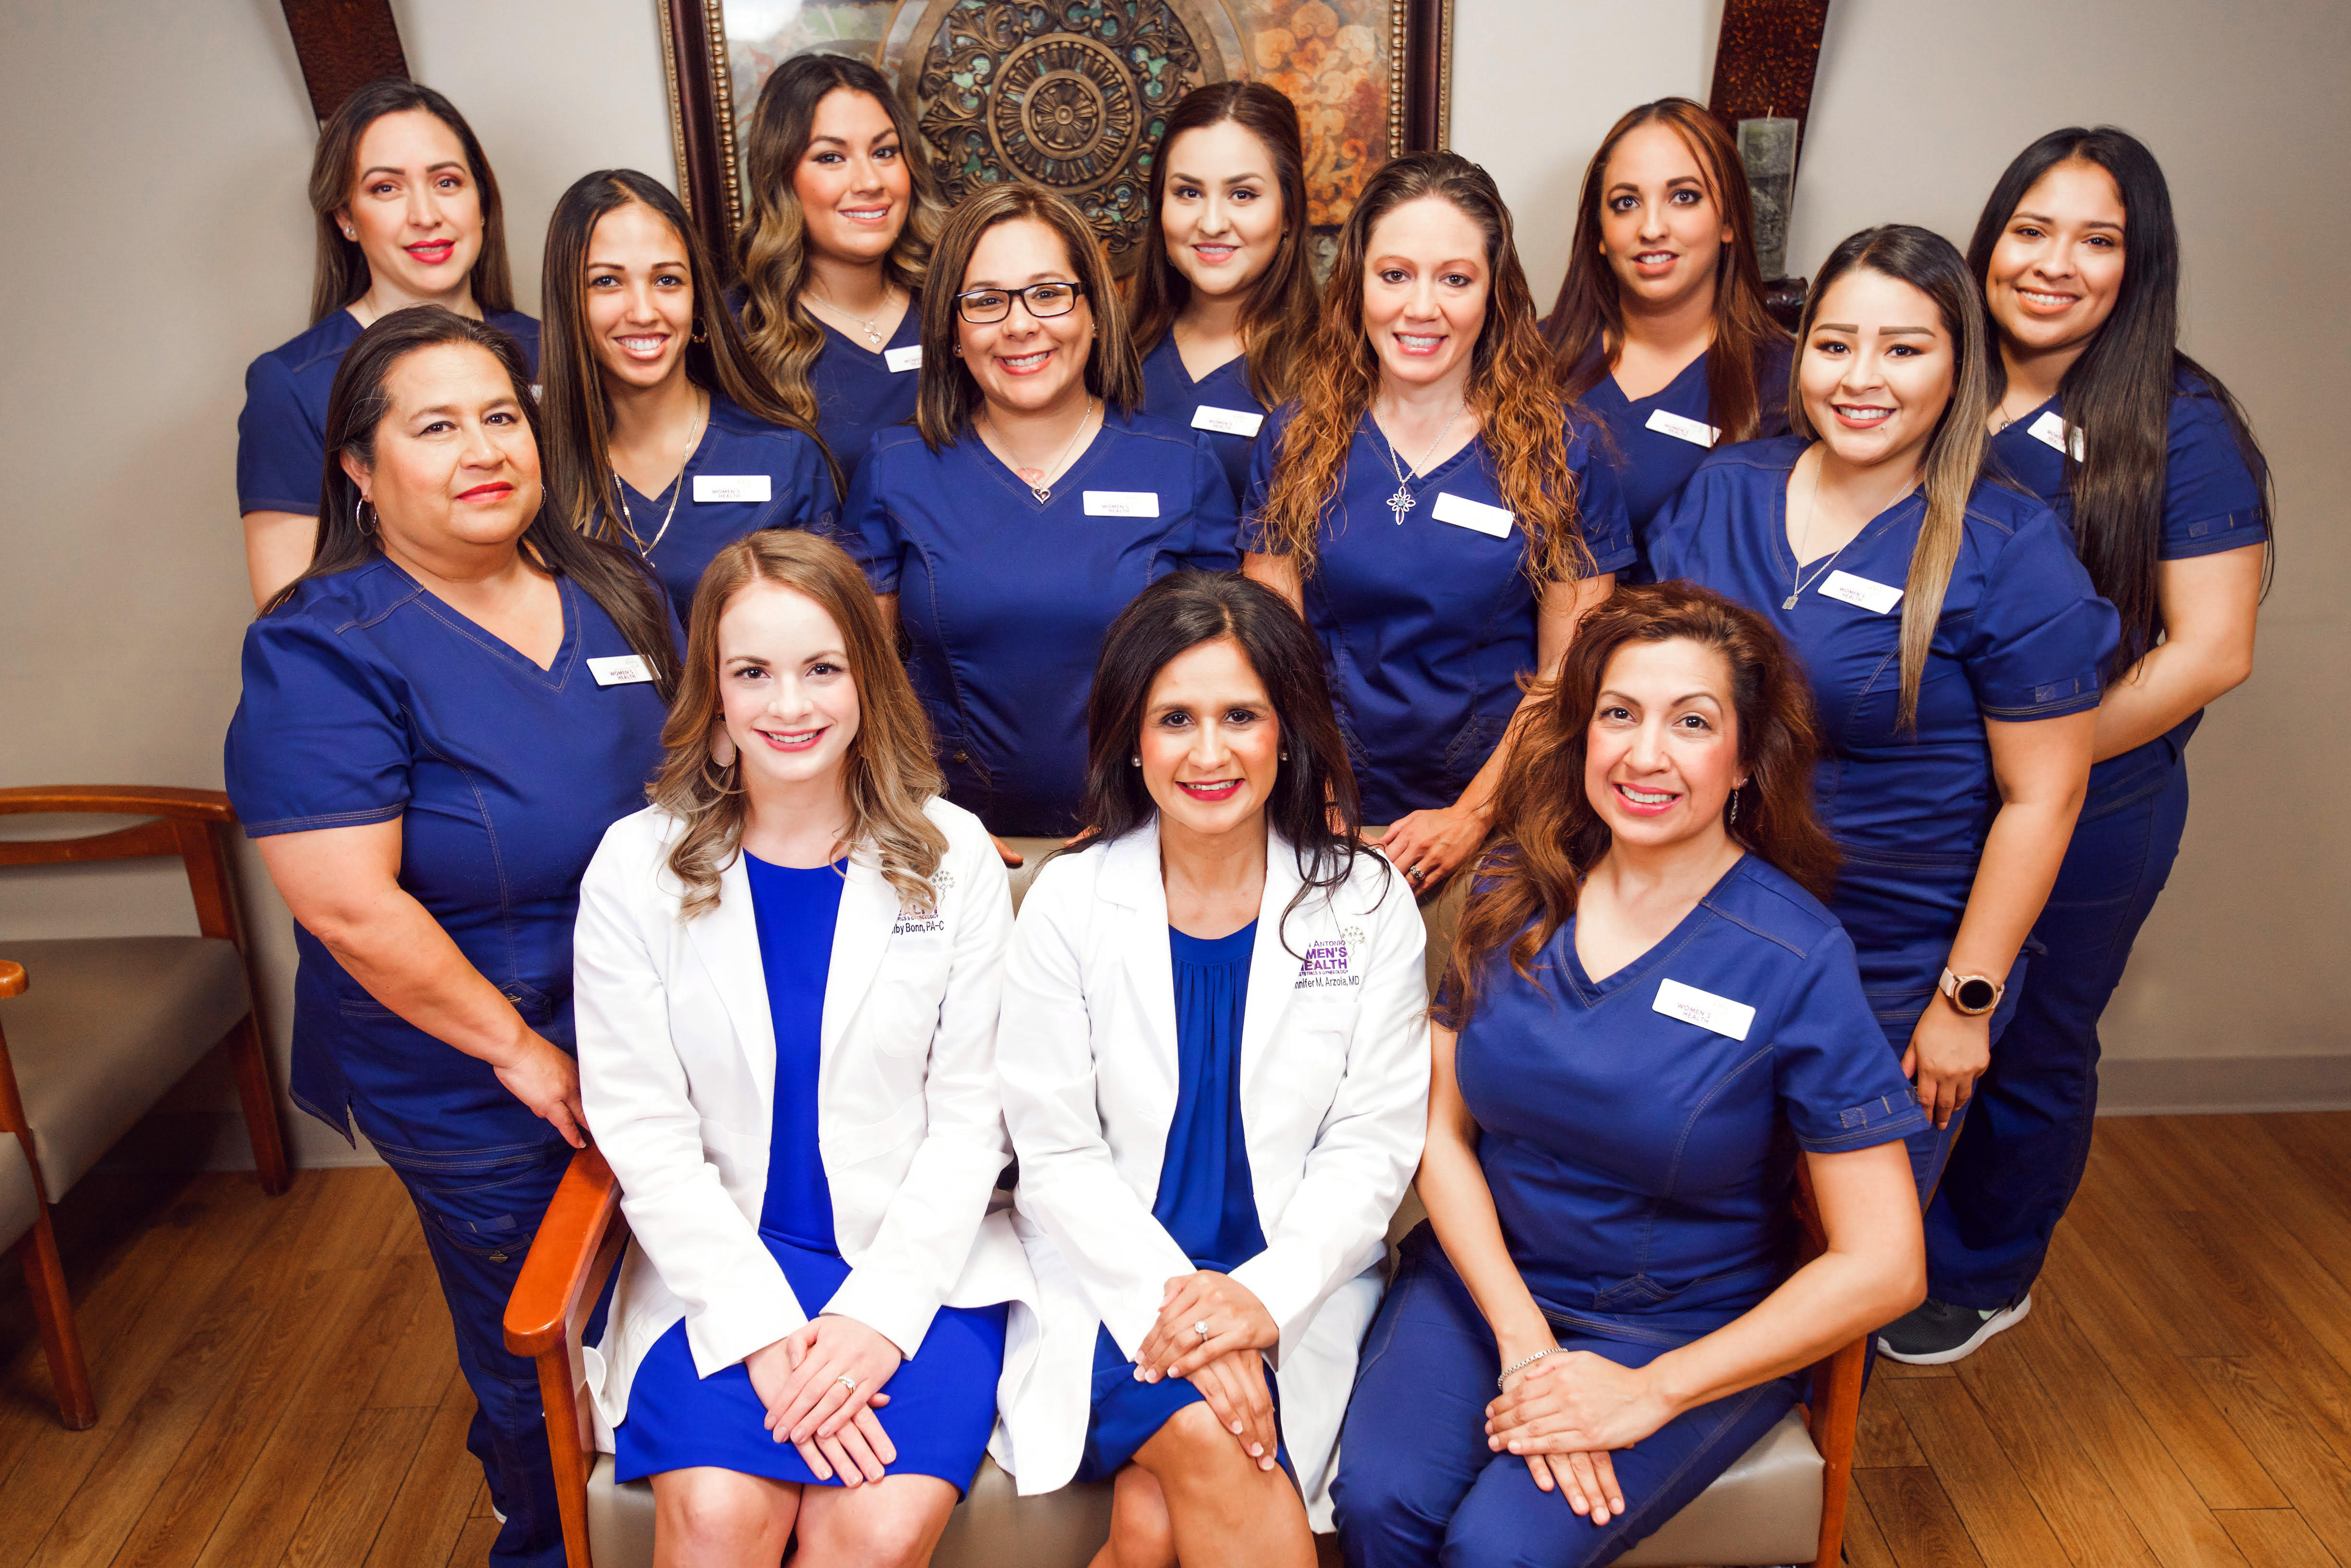 San Antonio Women's Health Photo